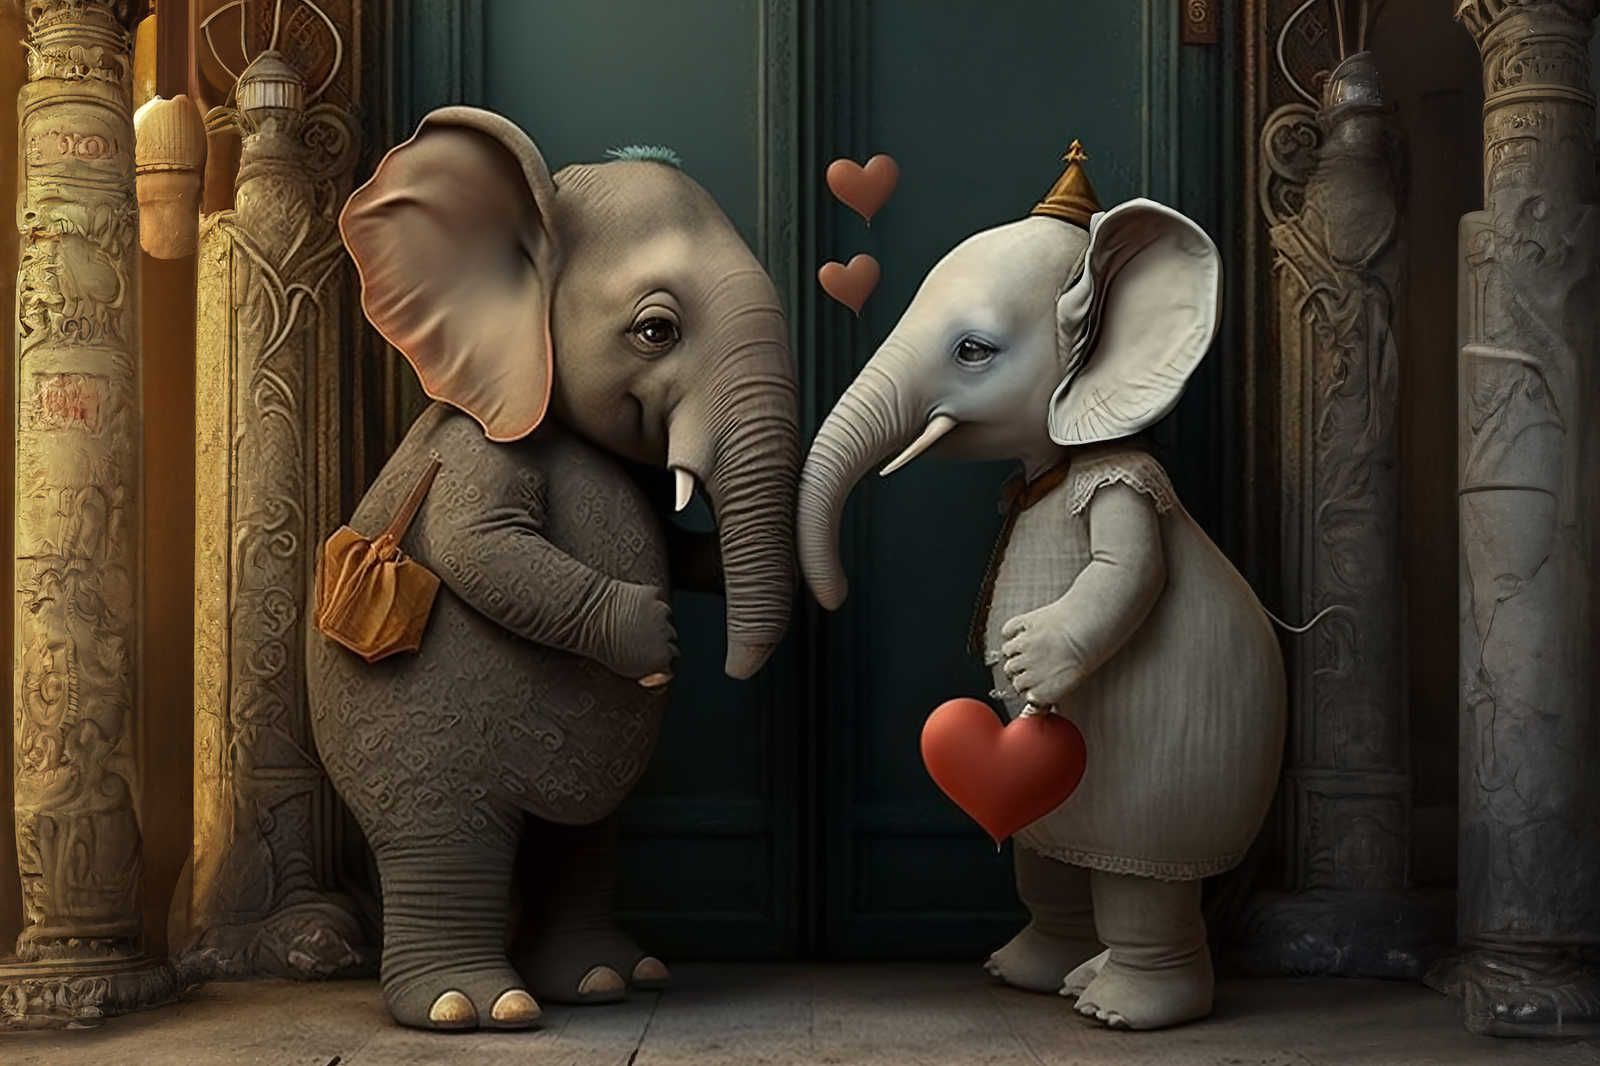             KI Canvas painting »elephant love« - 120 cm x 80 cm
        